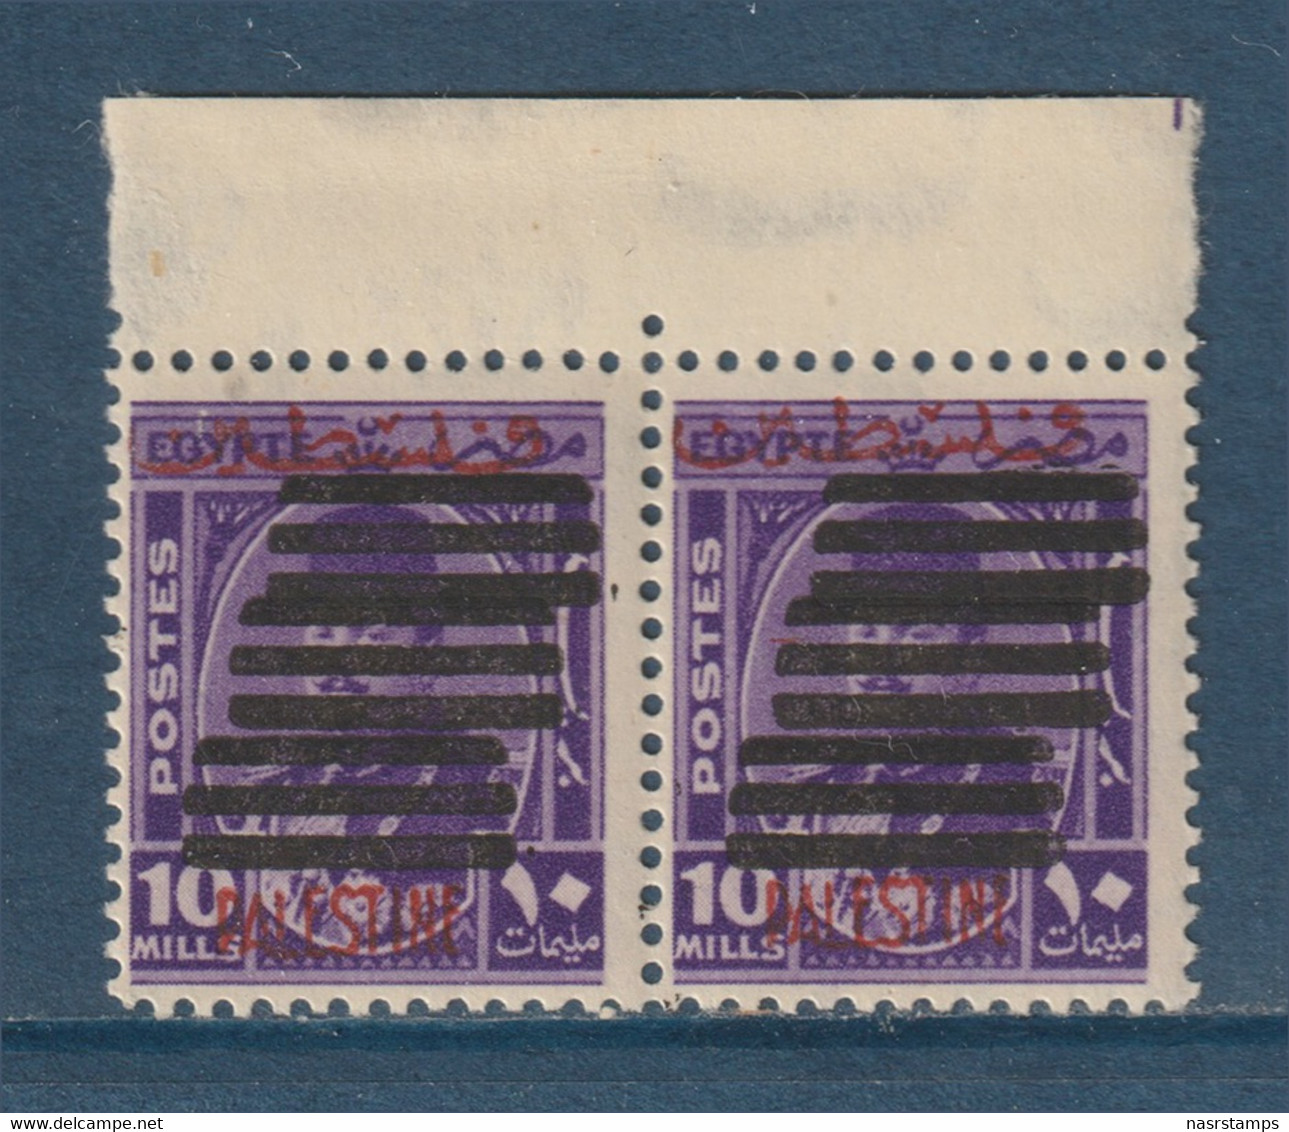 Egypt - Palestine - 1953 - Very Rare - Overprinted 9 Bars - ( 10m - K. Farouk ) - MNH - Unused Stamps